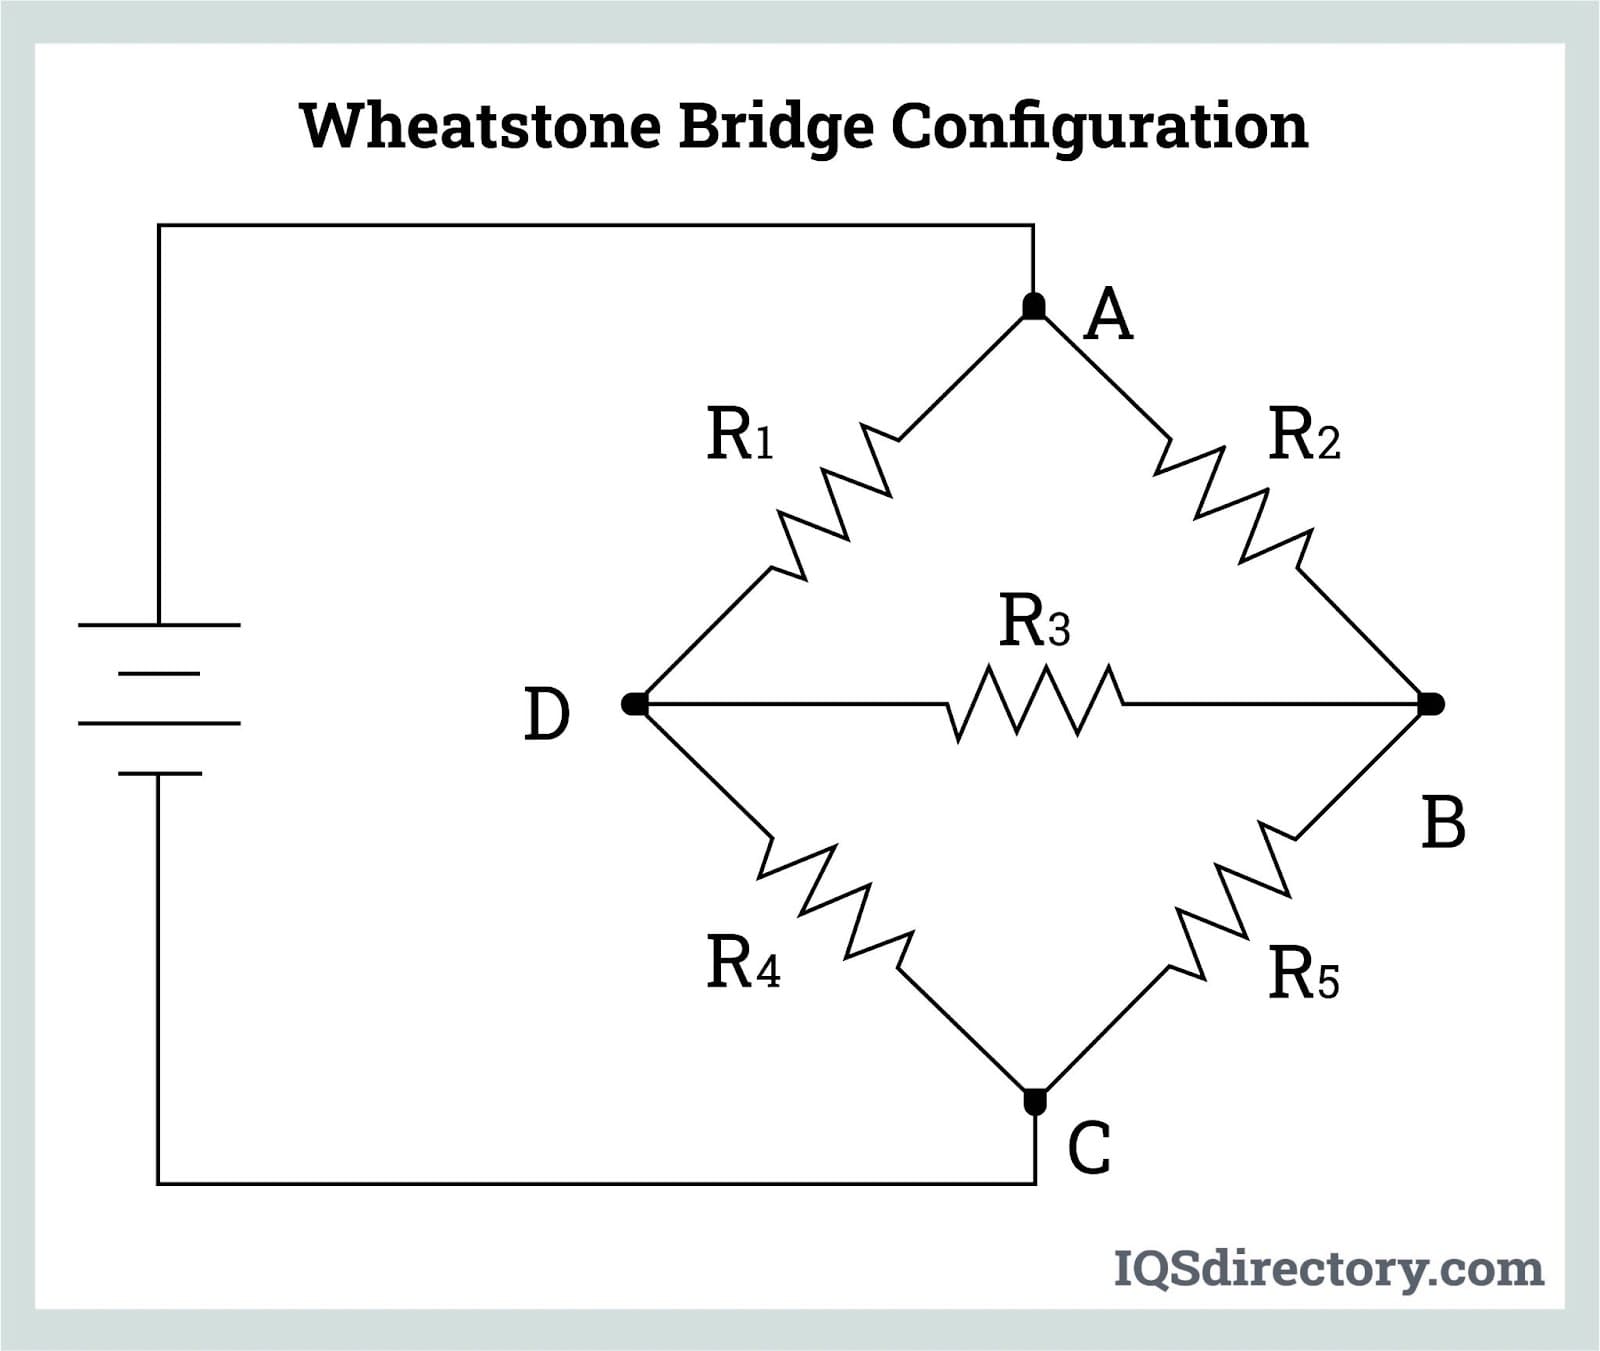 Wheatstone Bridge Configuration